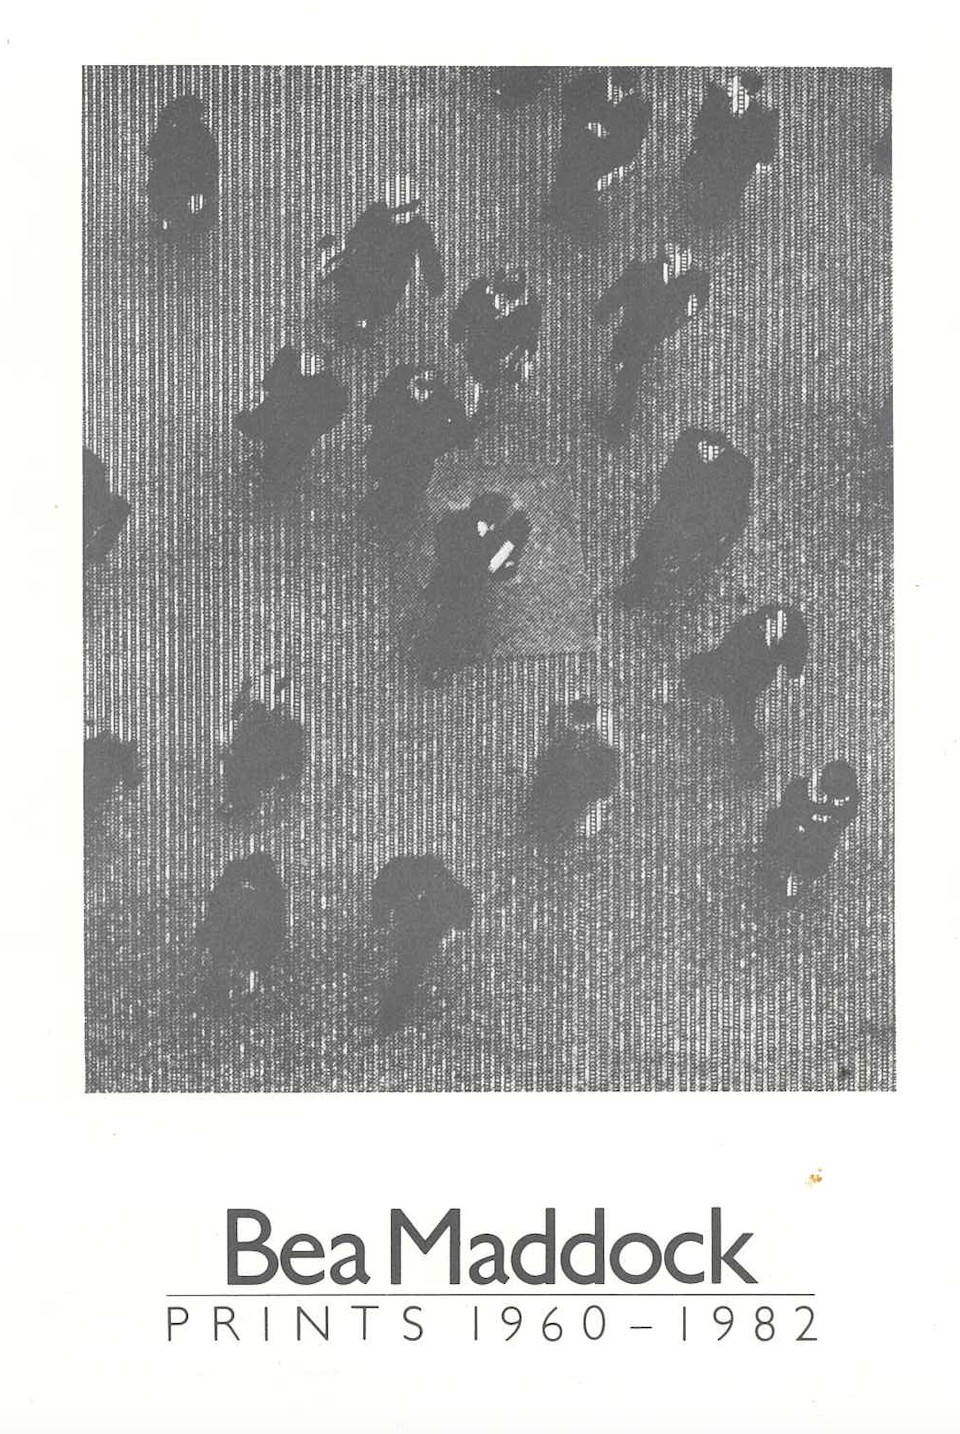 <p>Bea Maddock Prints 1960&ndash;1982</p>